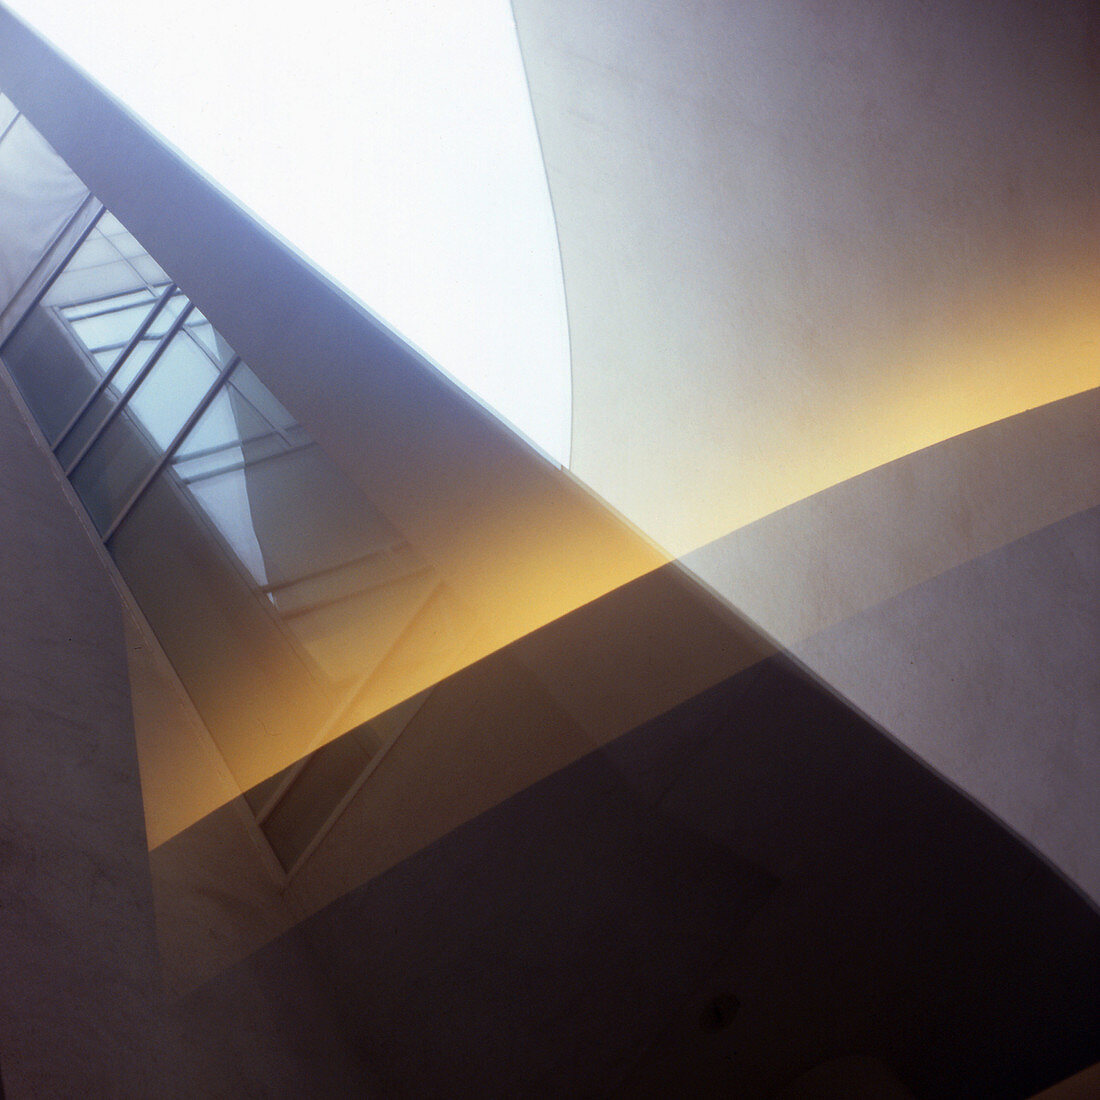 MACBA, Museum of Contemporary Art (1987-95, by Richard Meier). Barcelona. Spain